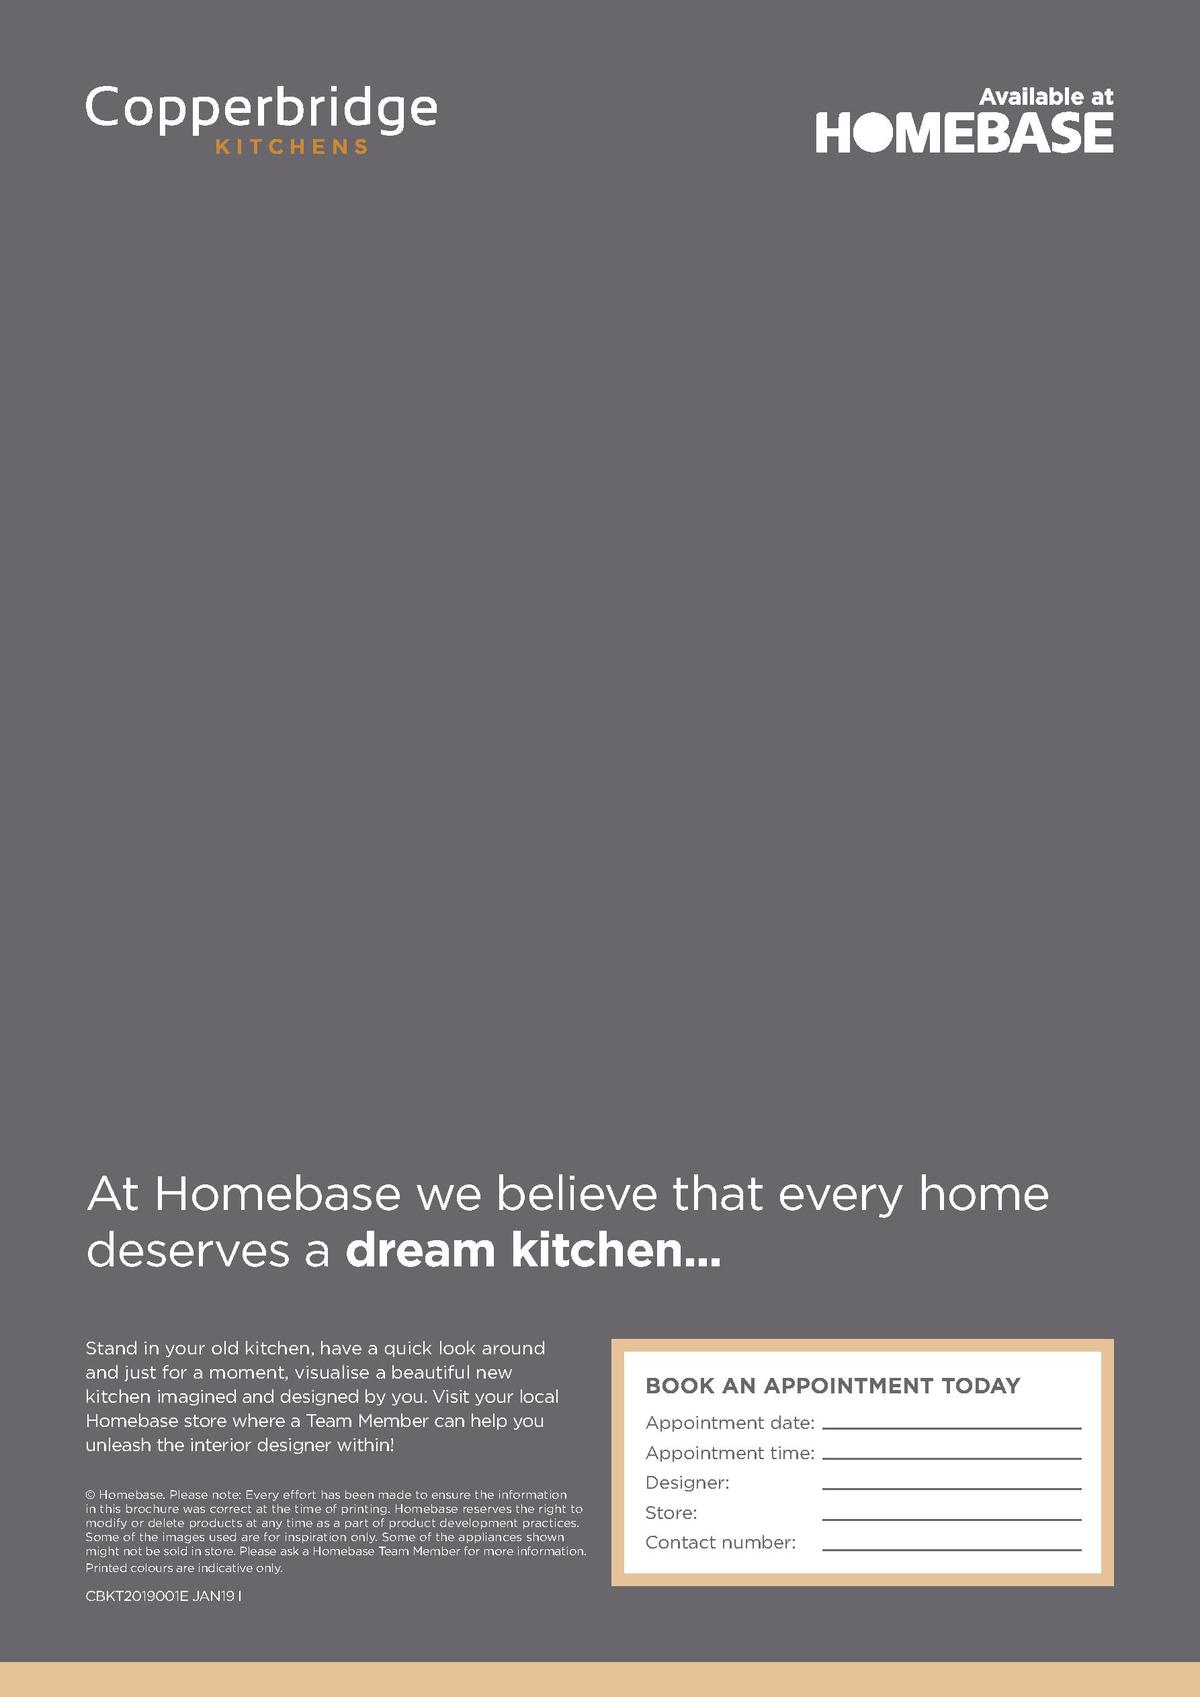 Homebase Copperbridge Kitchens Brochure Offers from 1 January